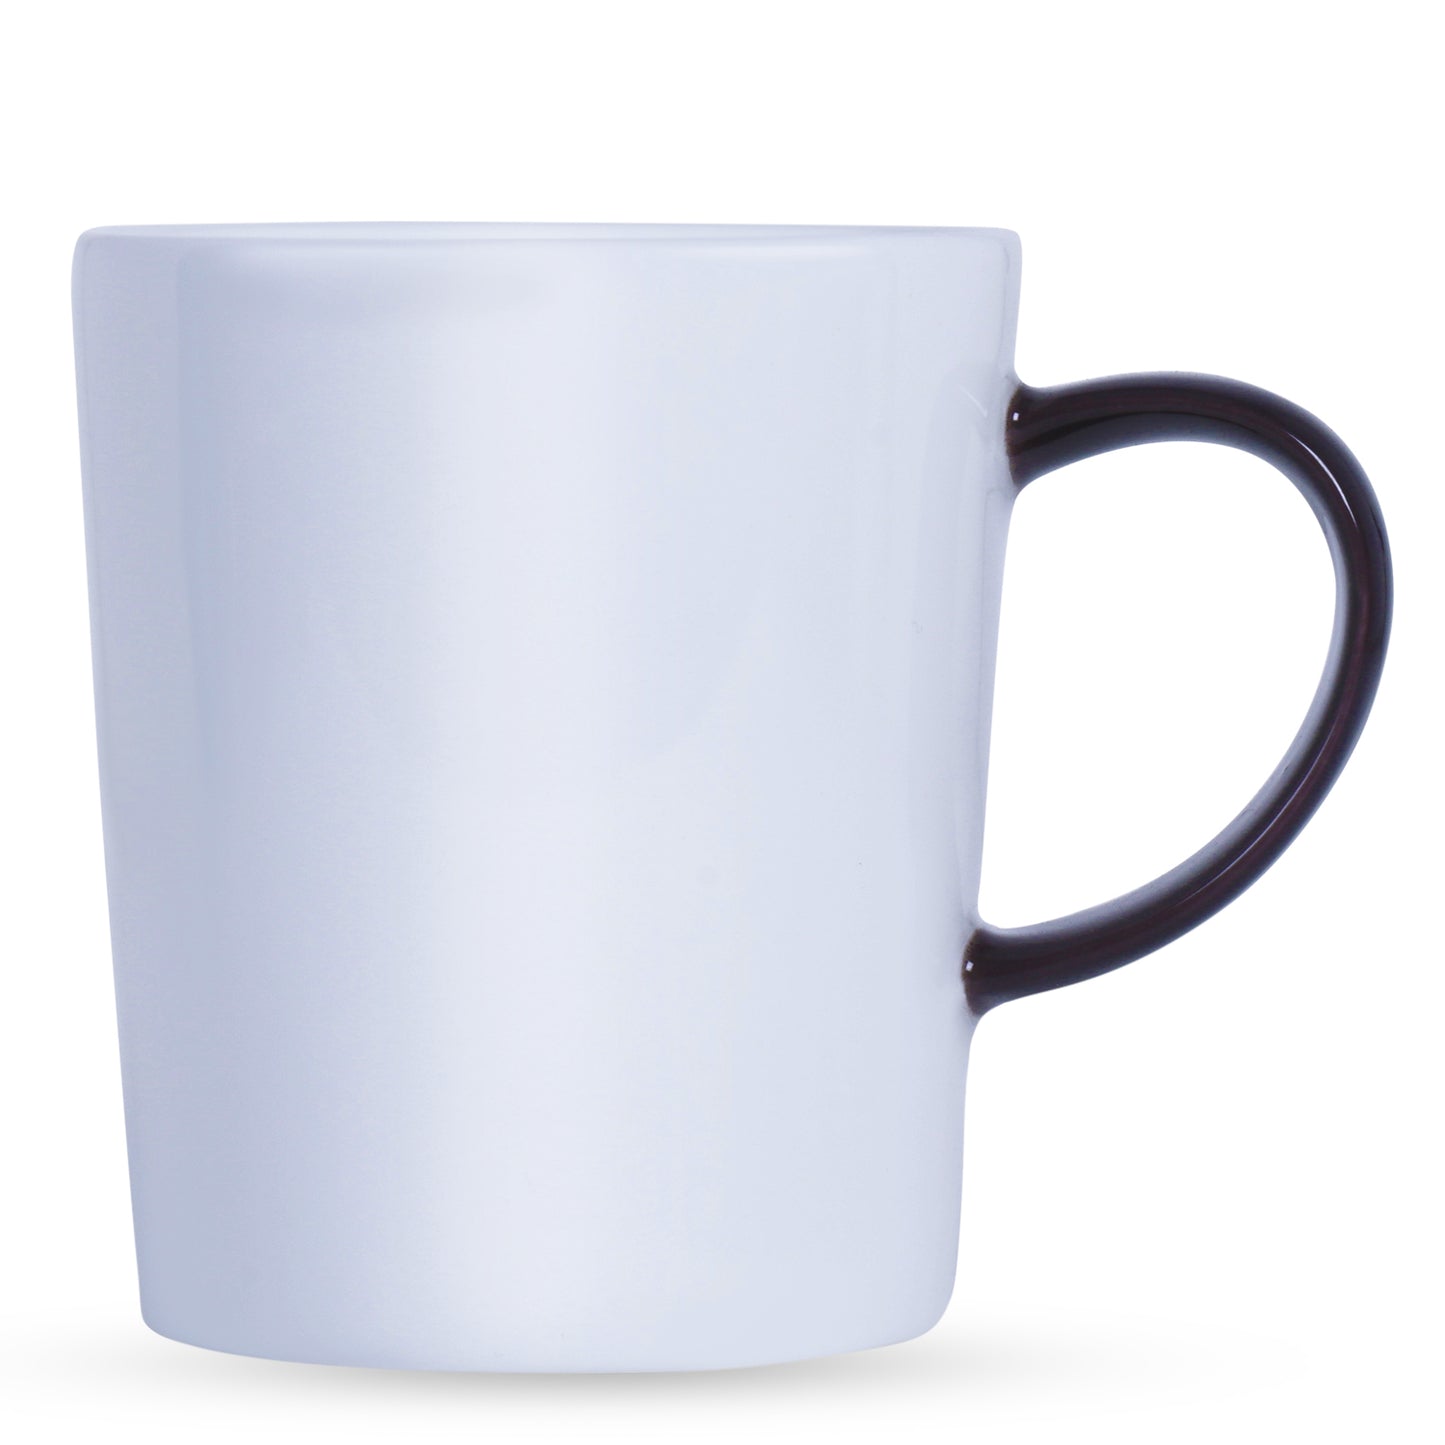 Monno Snap Mug Cassis 266 ml, Set of 2